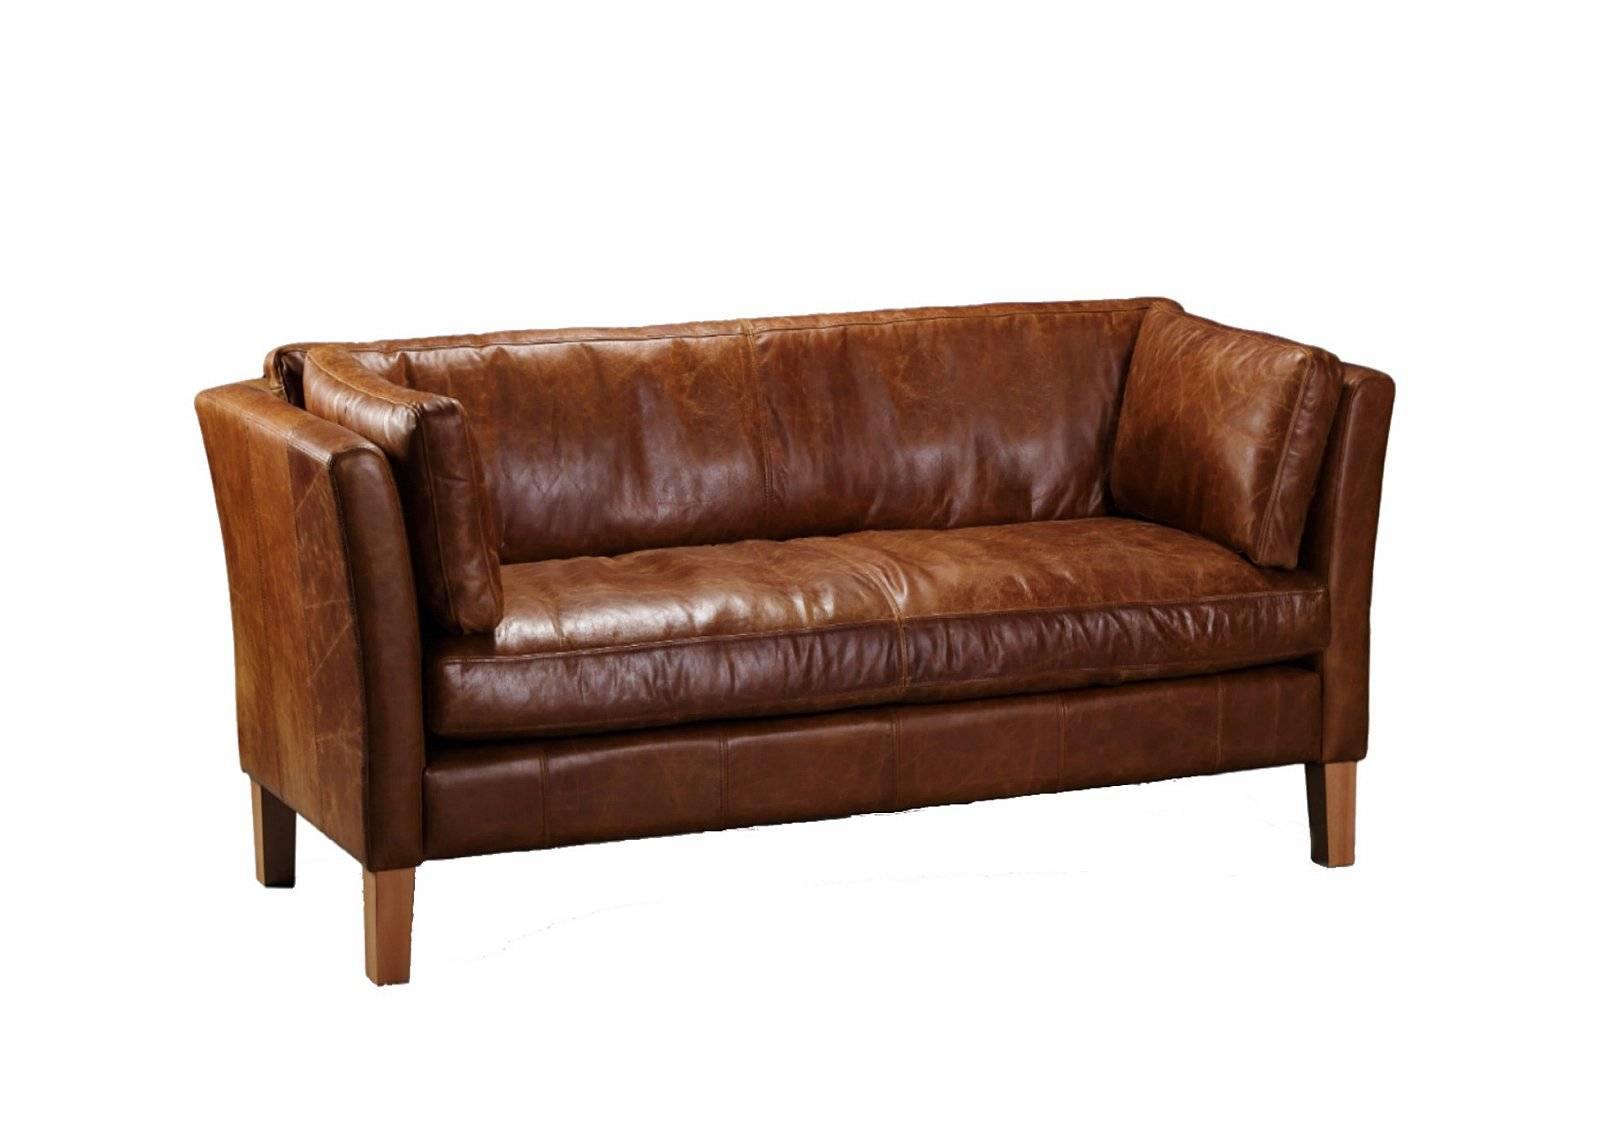 Barkby 2 Seater Leather Sofa, The Leather Furniture Company